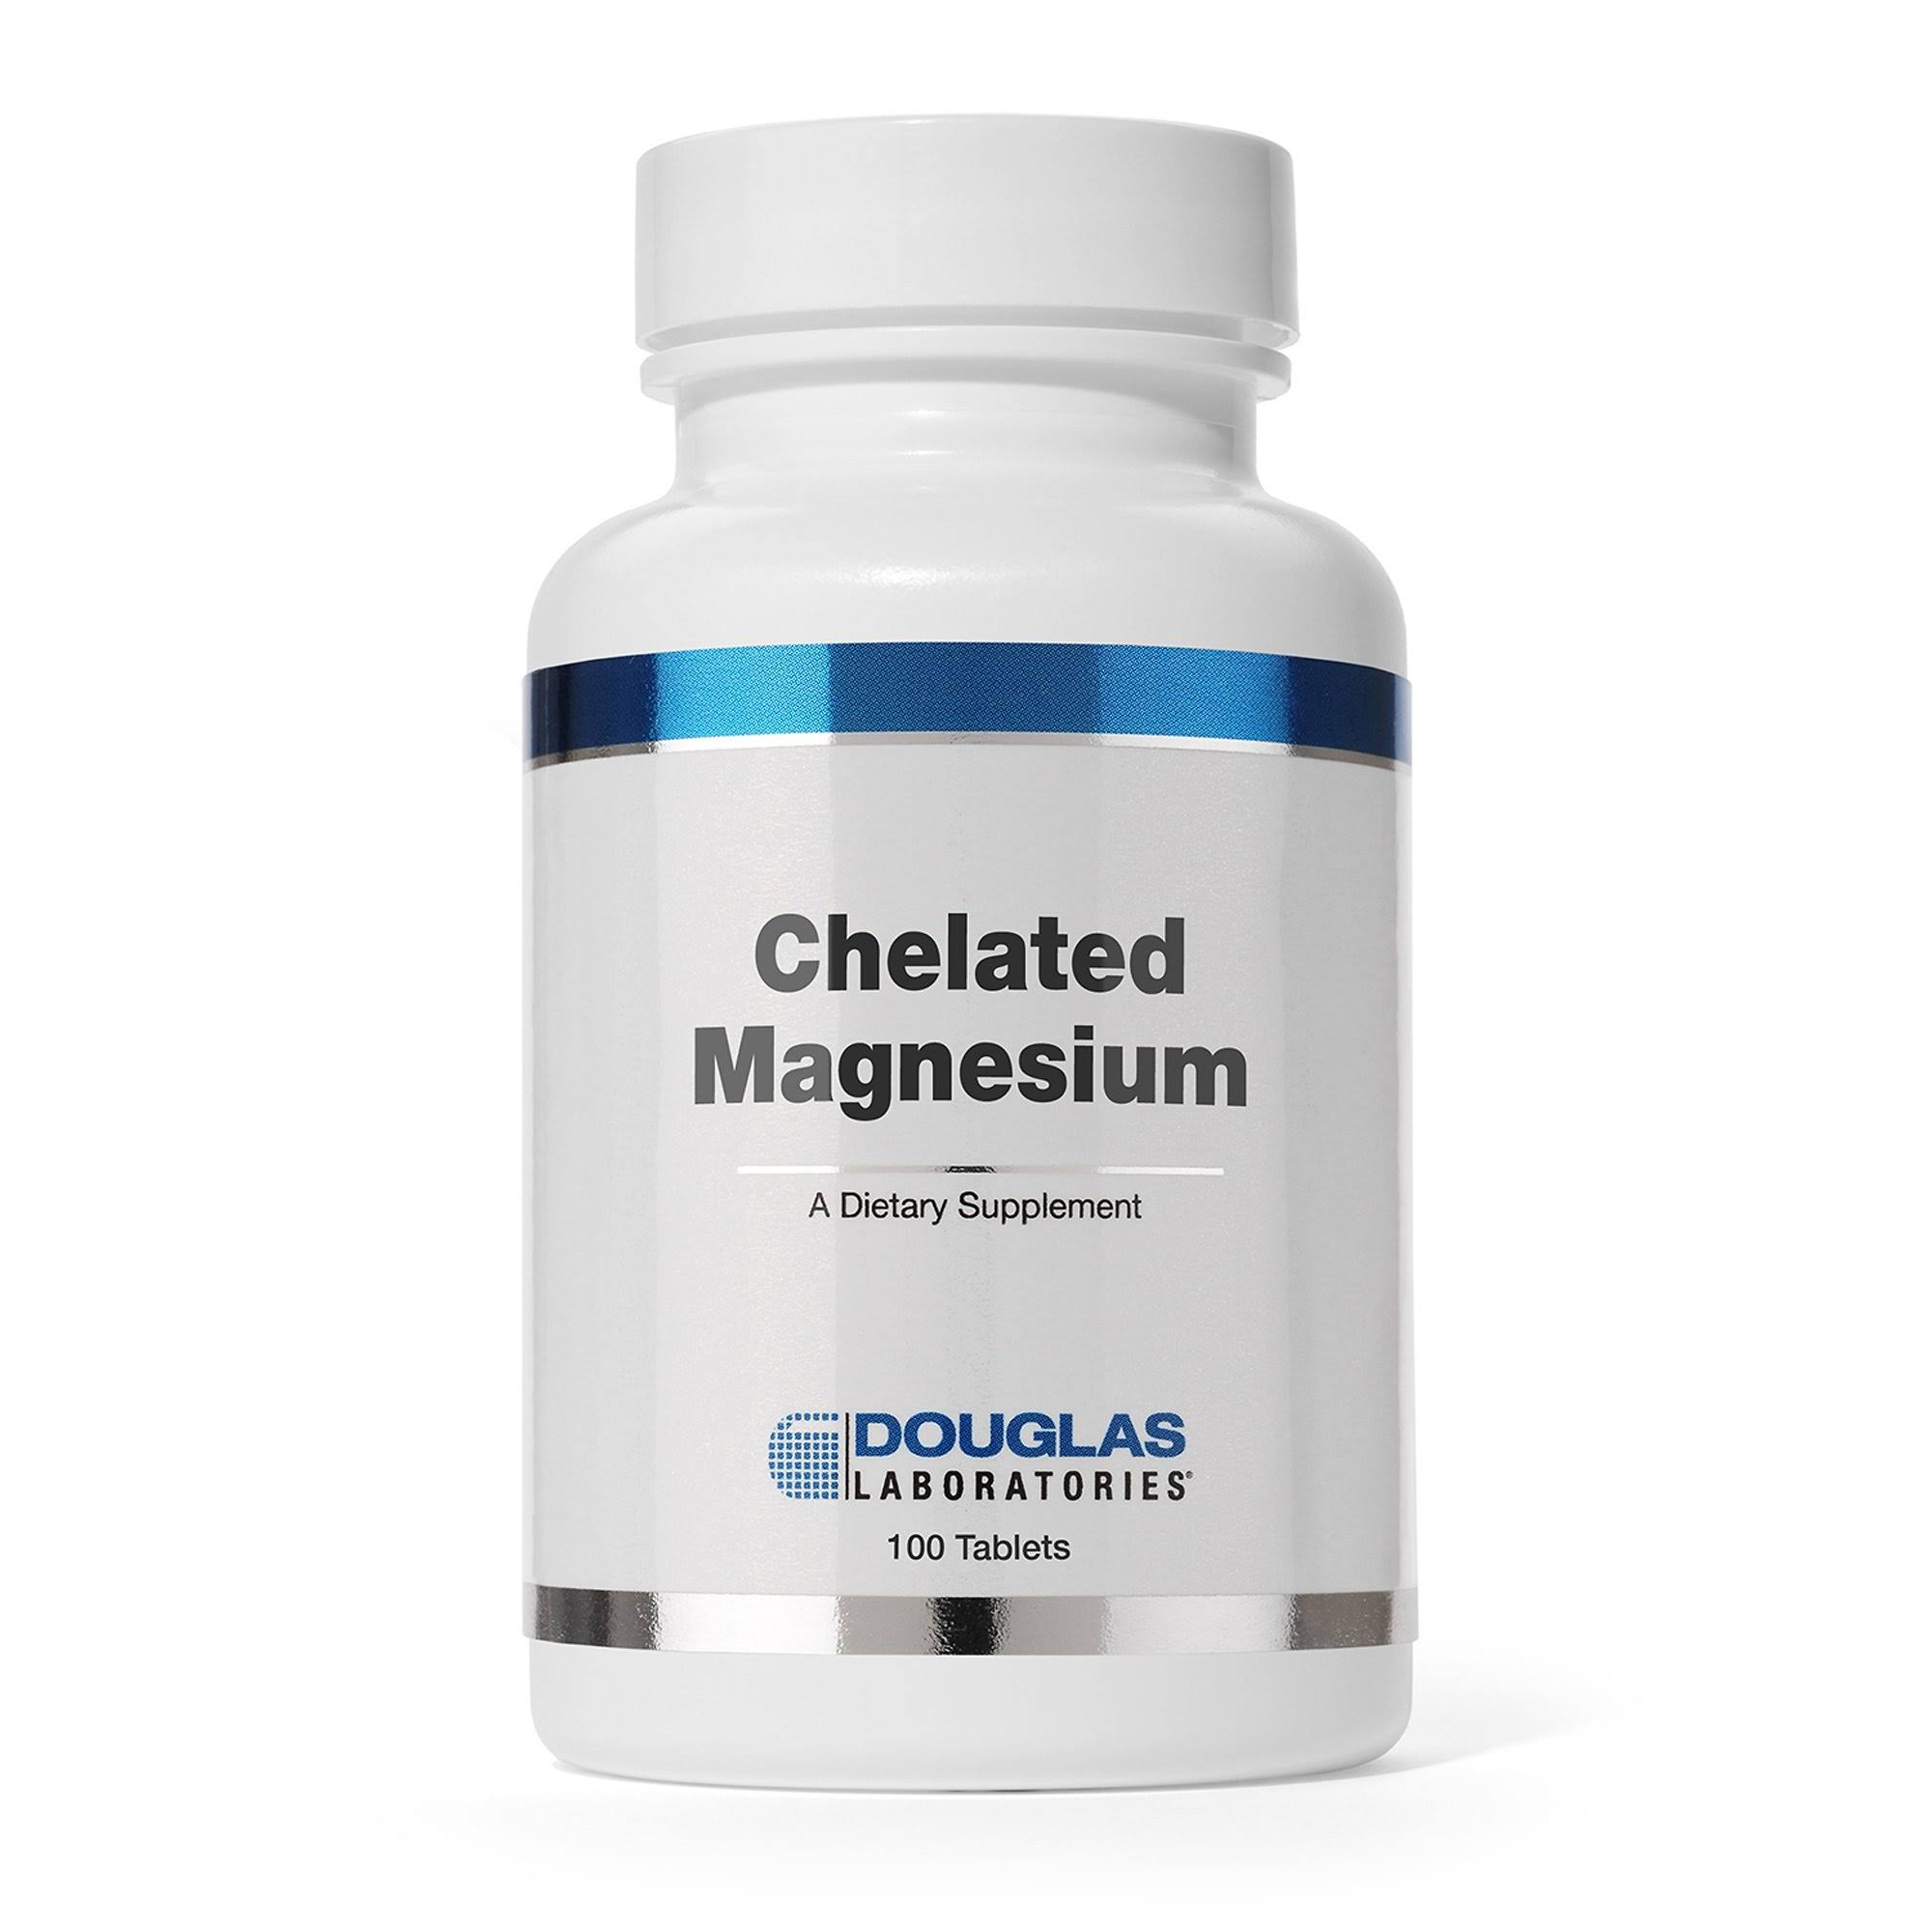 Douglas Laboratories - Chelated Magnesium - 100 Tablets